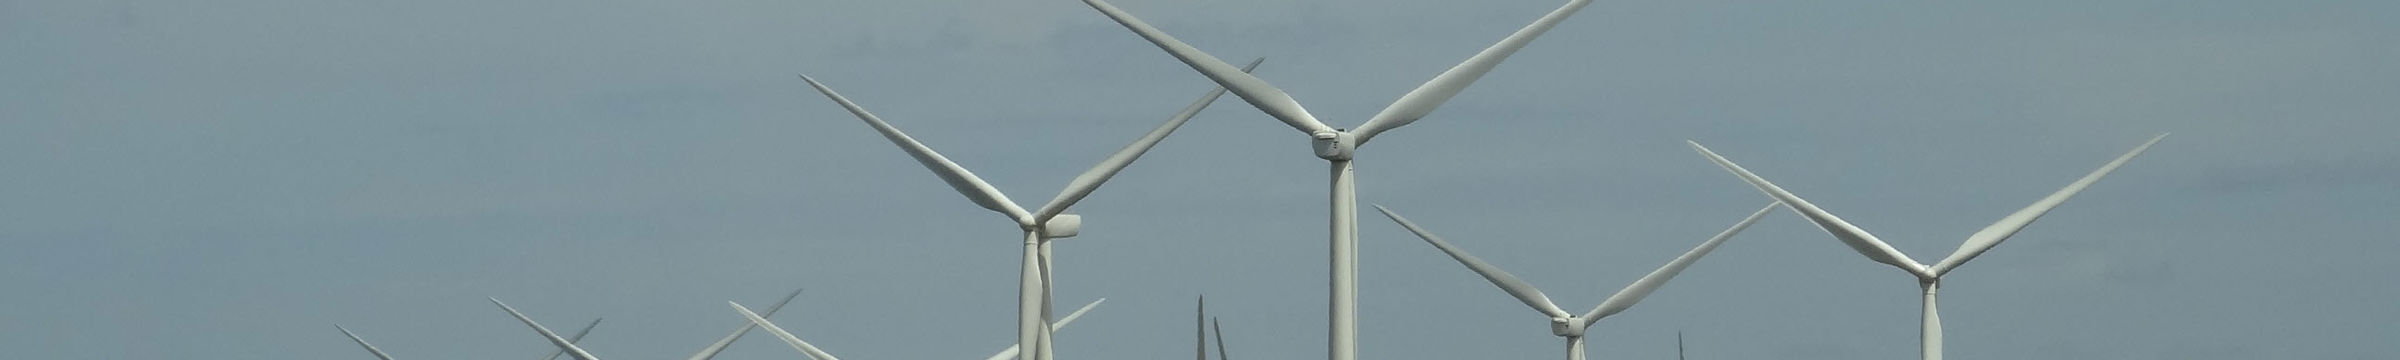 Statkraft's exisiting wind farm in Bahia